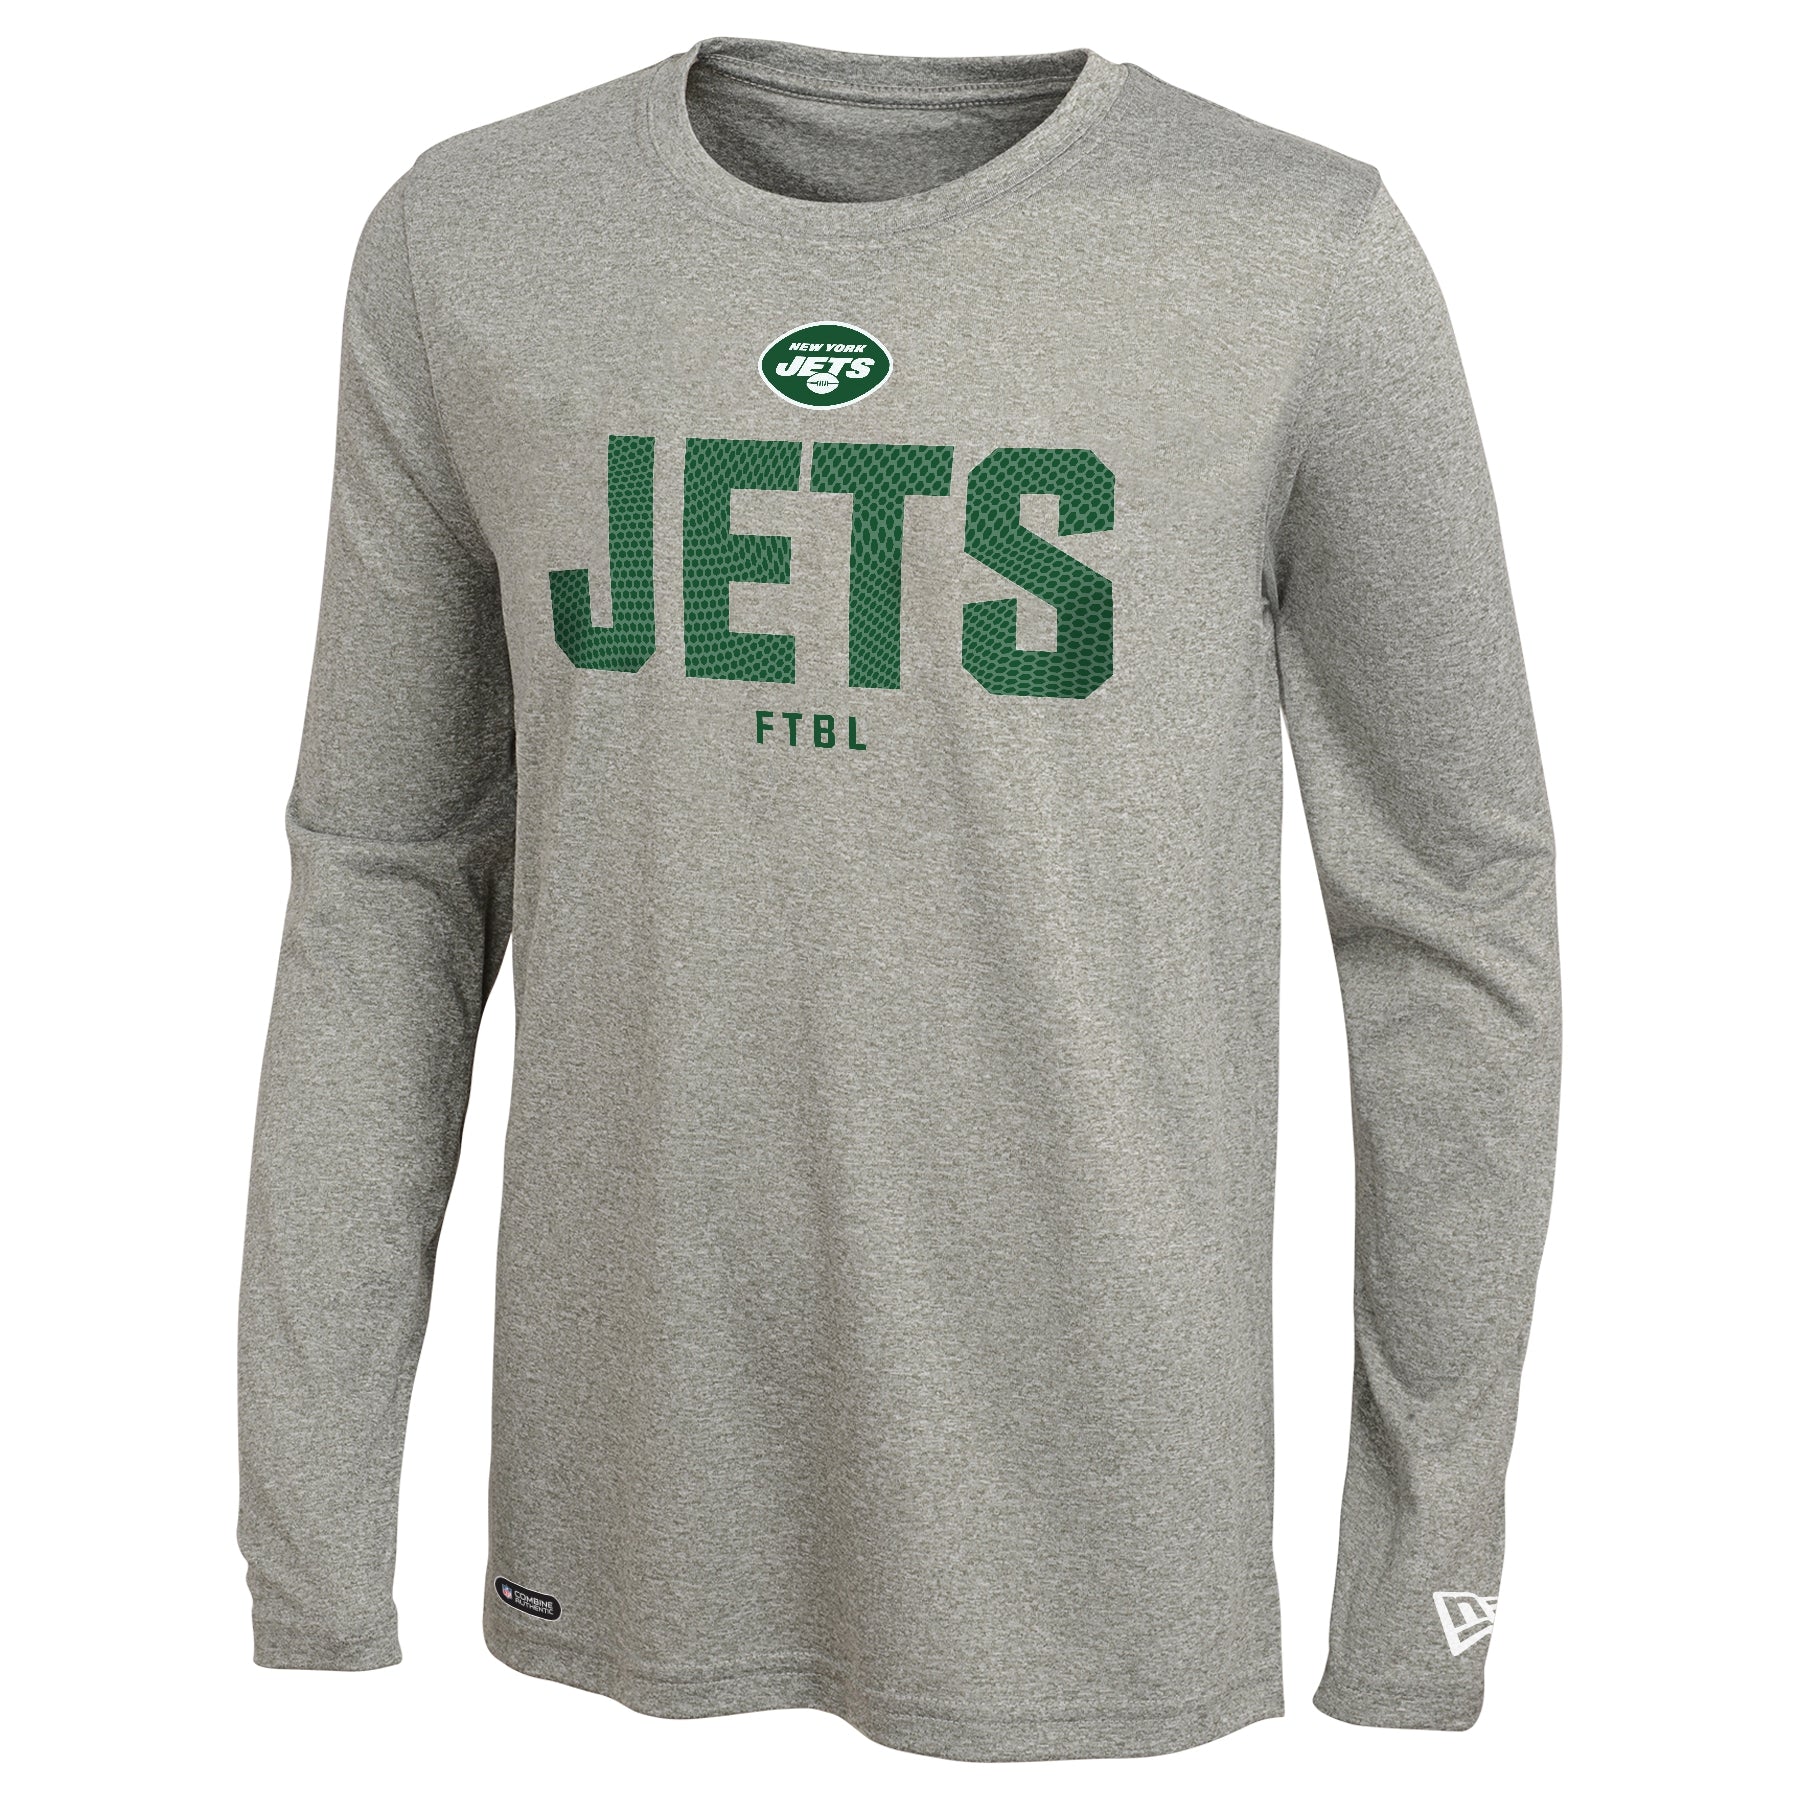 new york jets long sleeve shirt